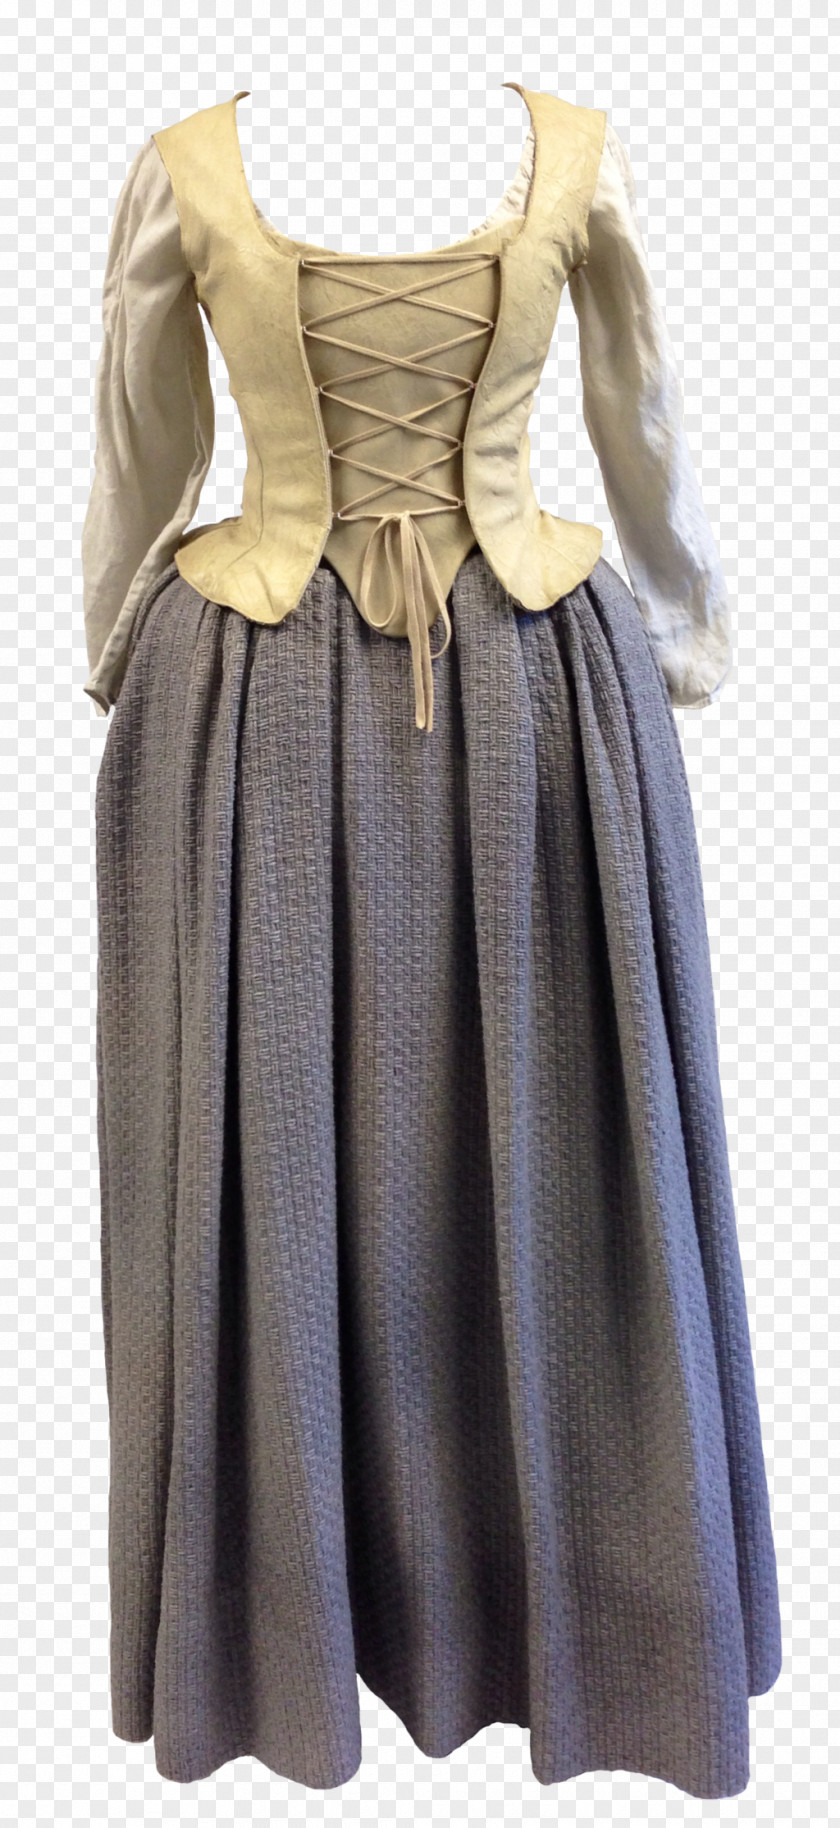 Ms. Dress Highland Geillis Duncan Clothing Costume PNG